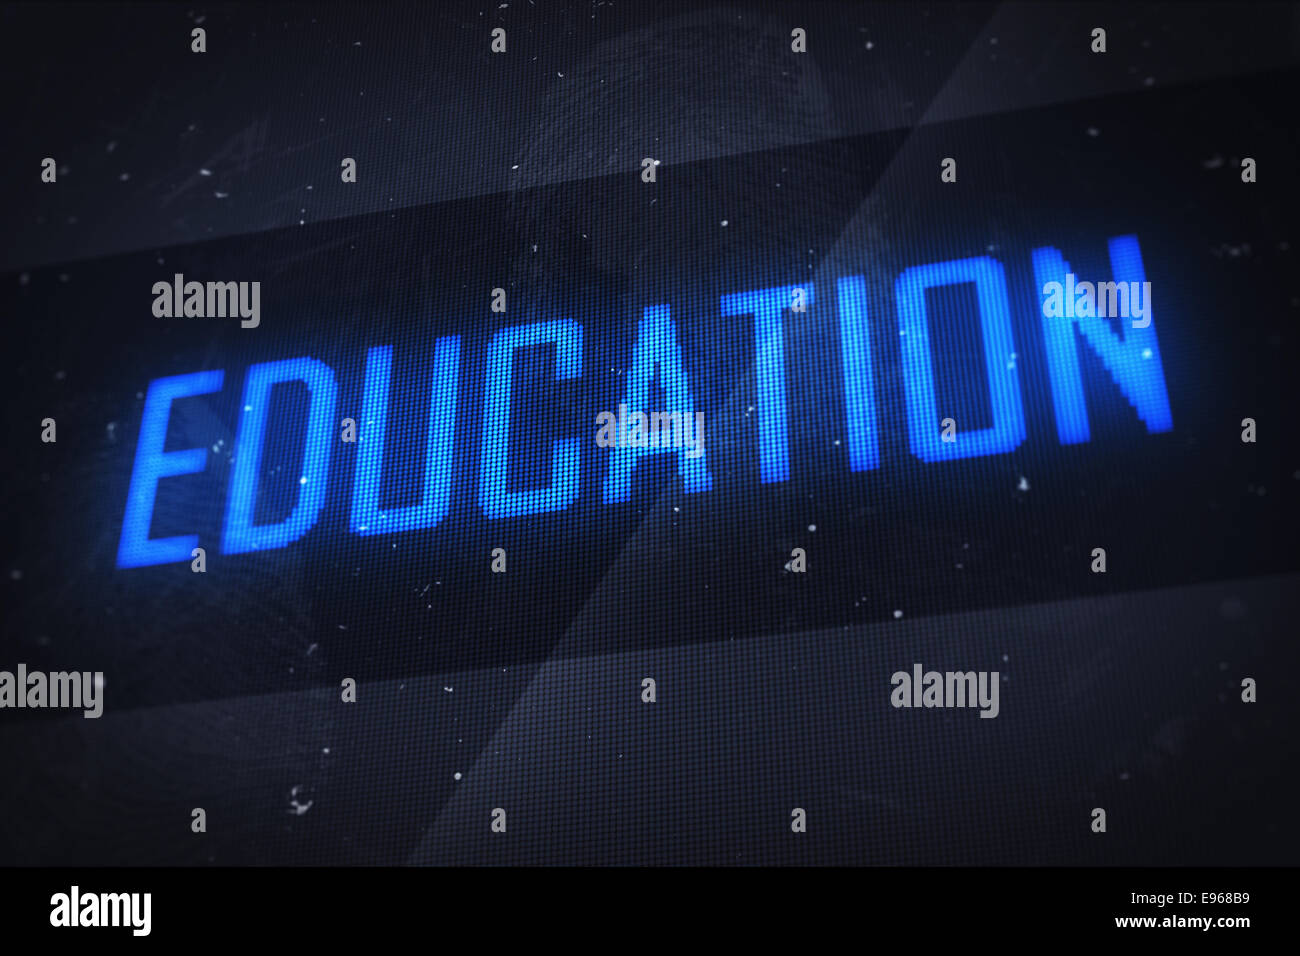 Concepto de educación. Negocios, tecnología, internet y el concepto de redes - Educación texto en pantallas virtuales Foto de stock